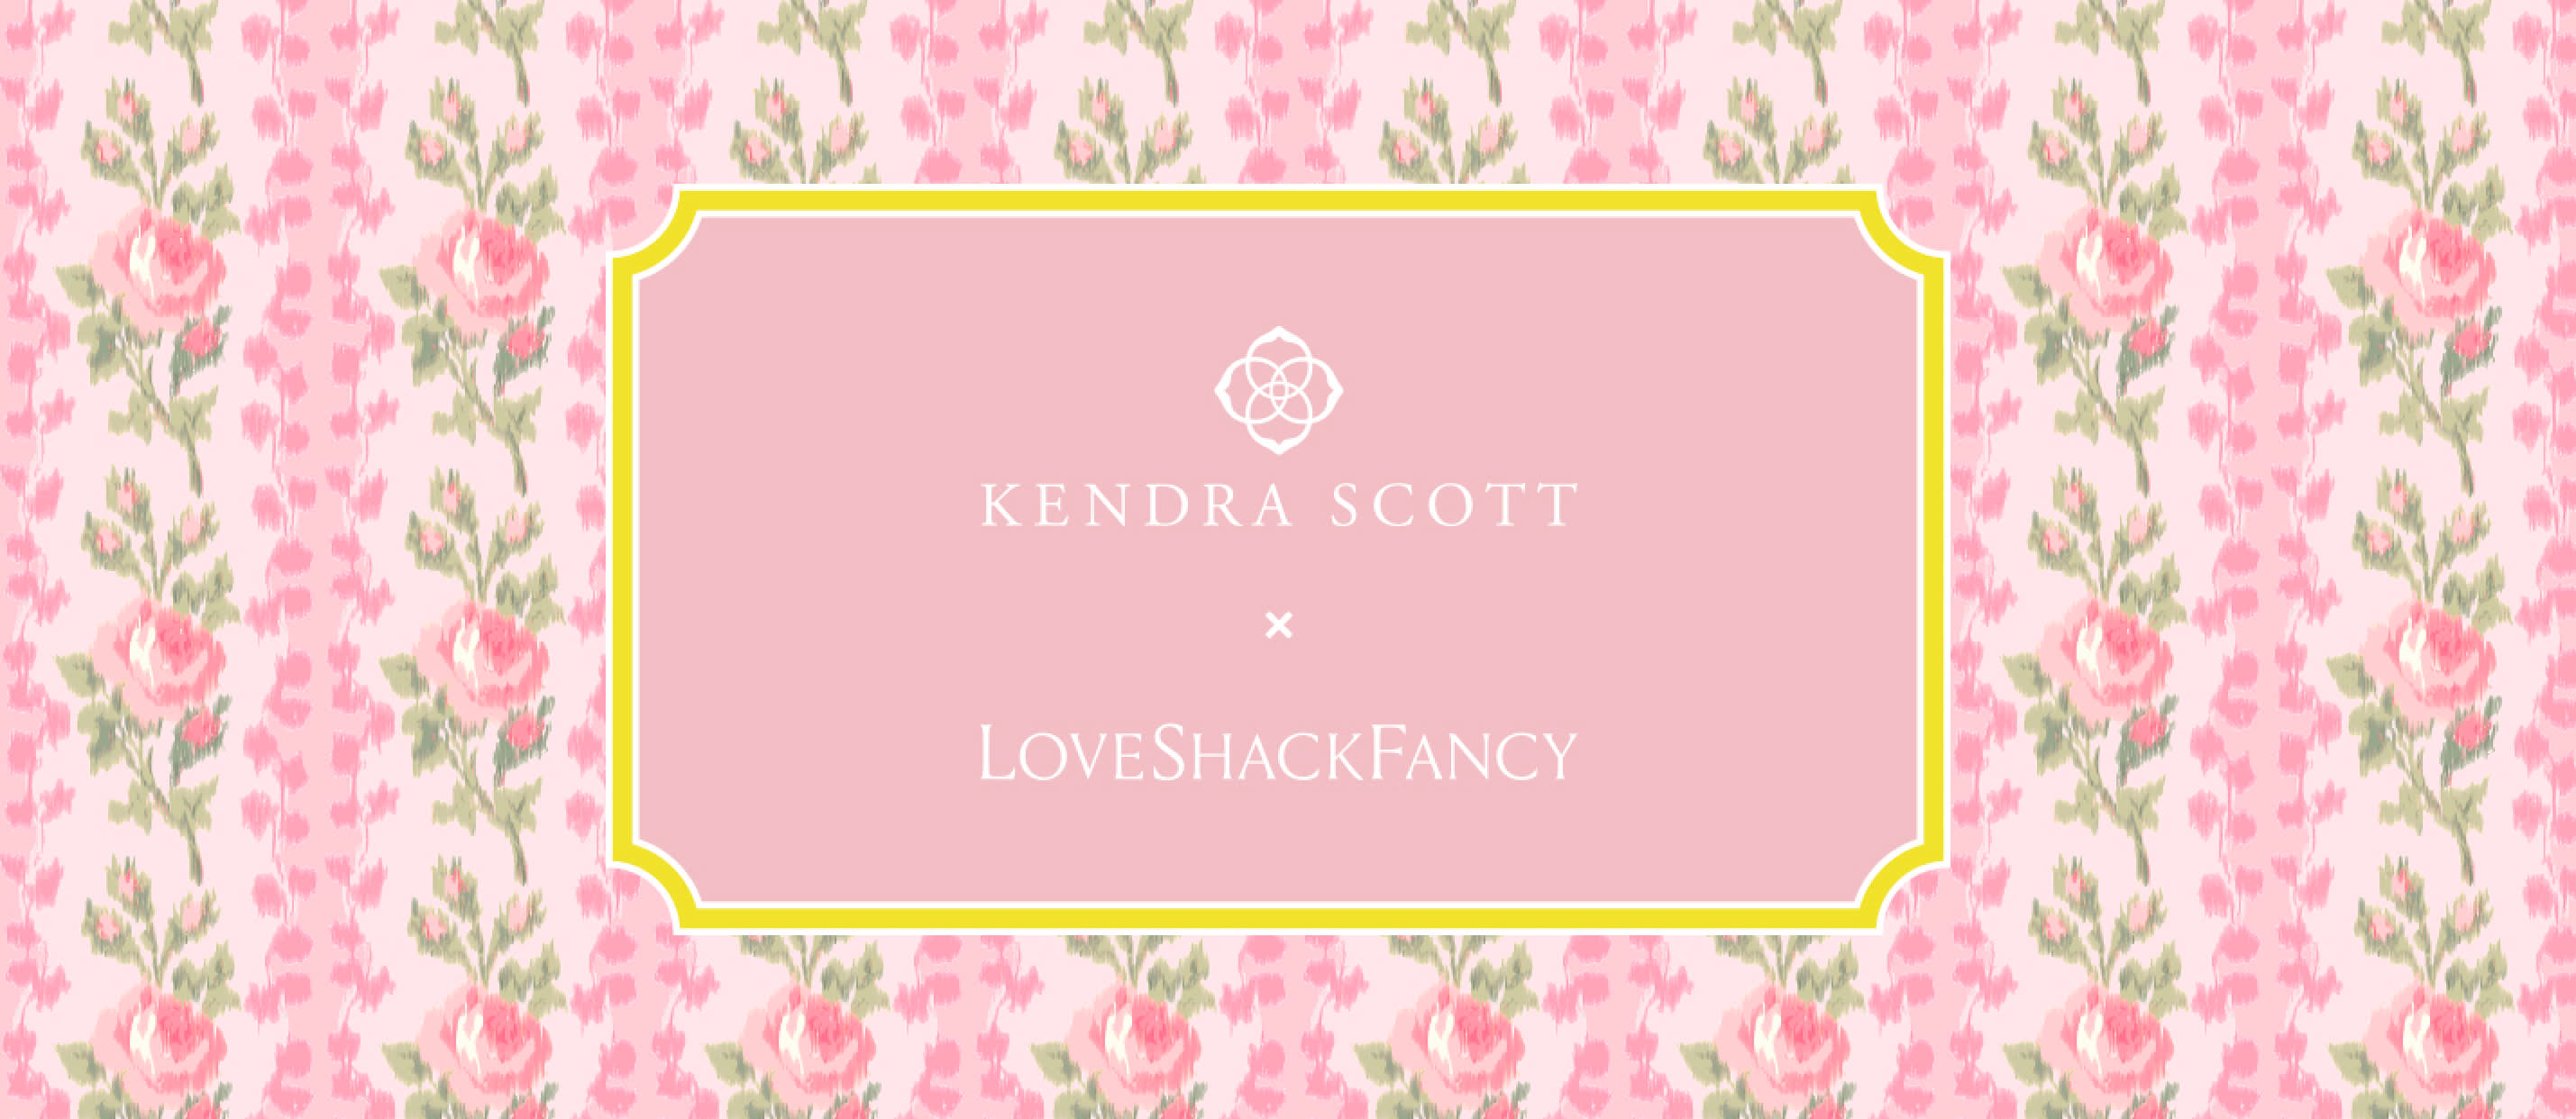 Kendra Scott x LoveShackFancy | Kendra Scott